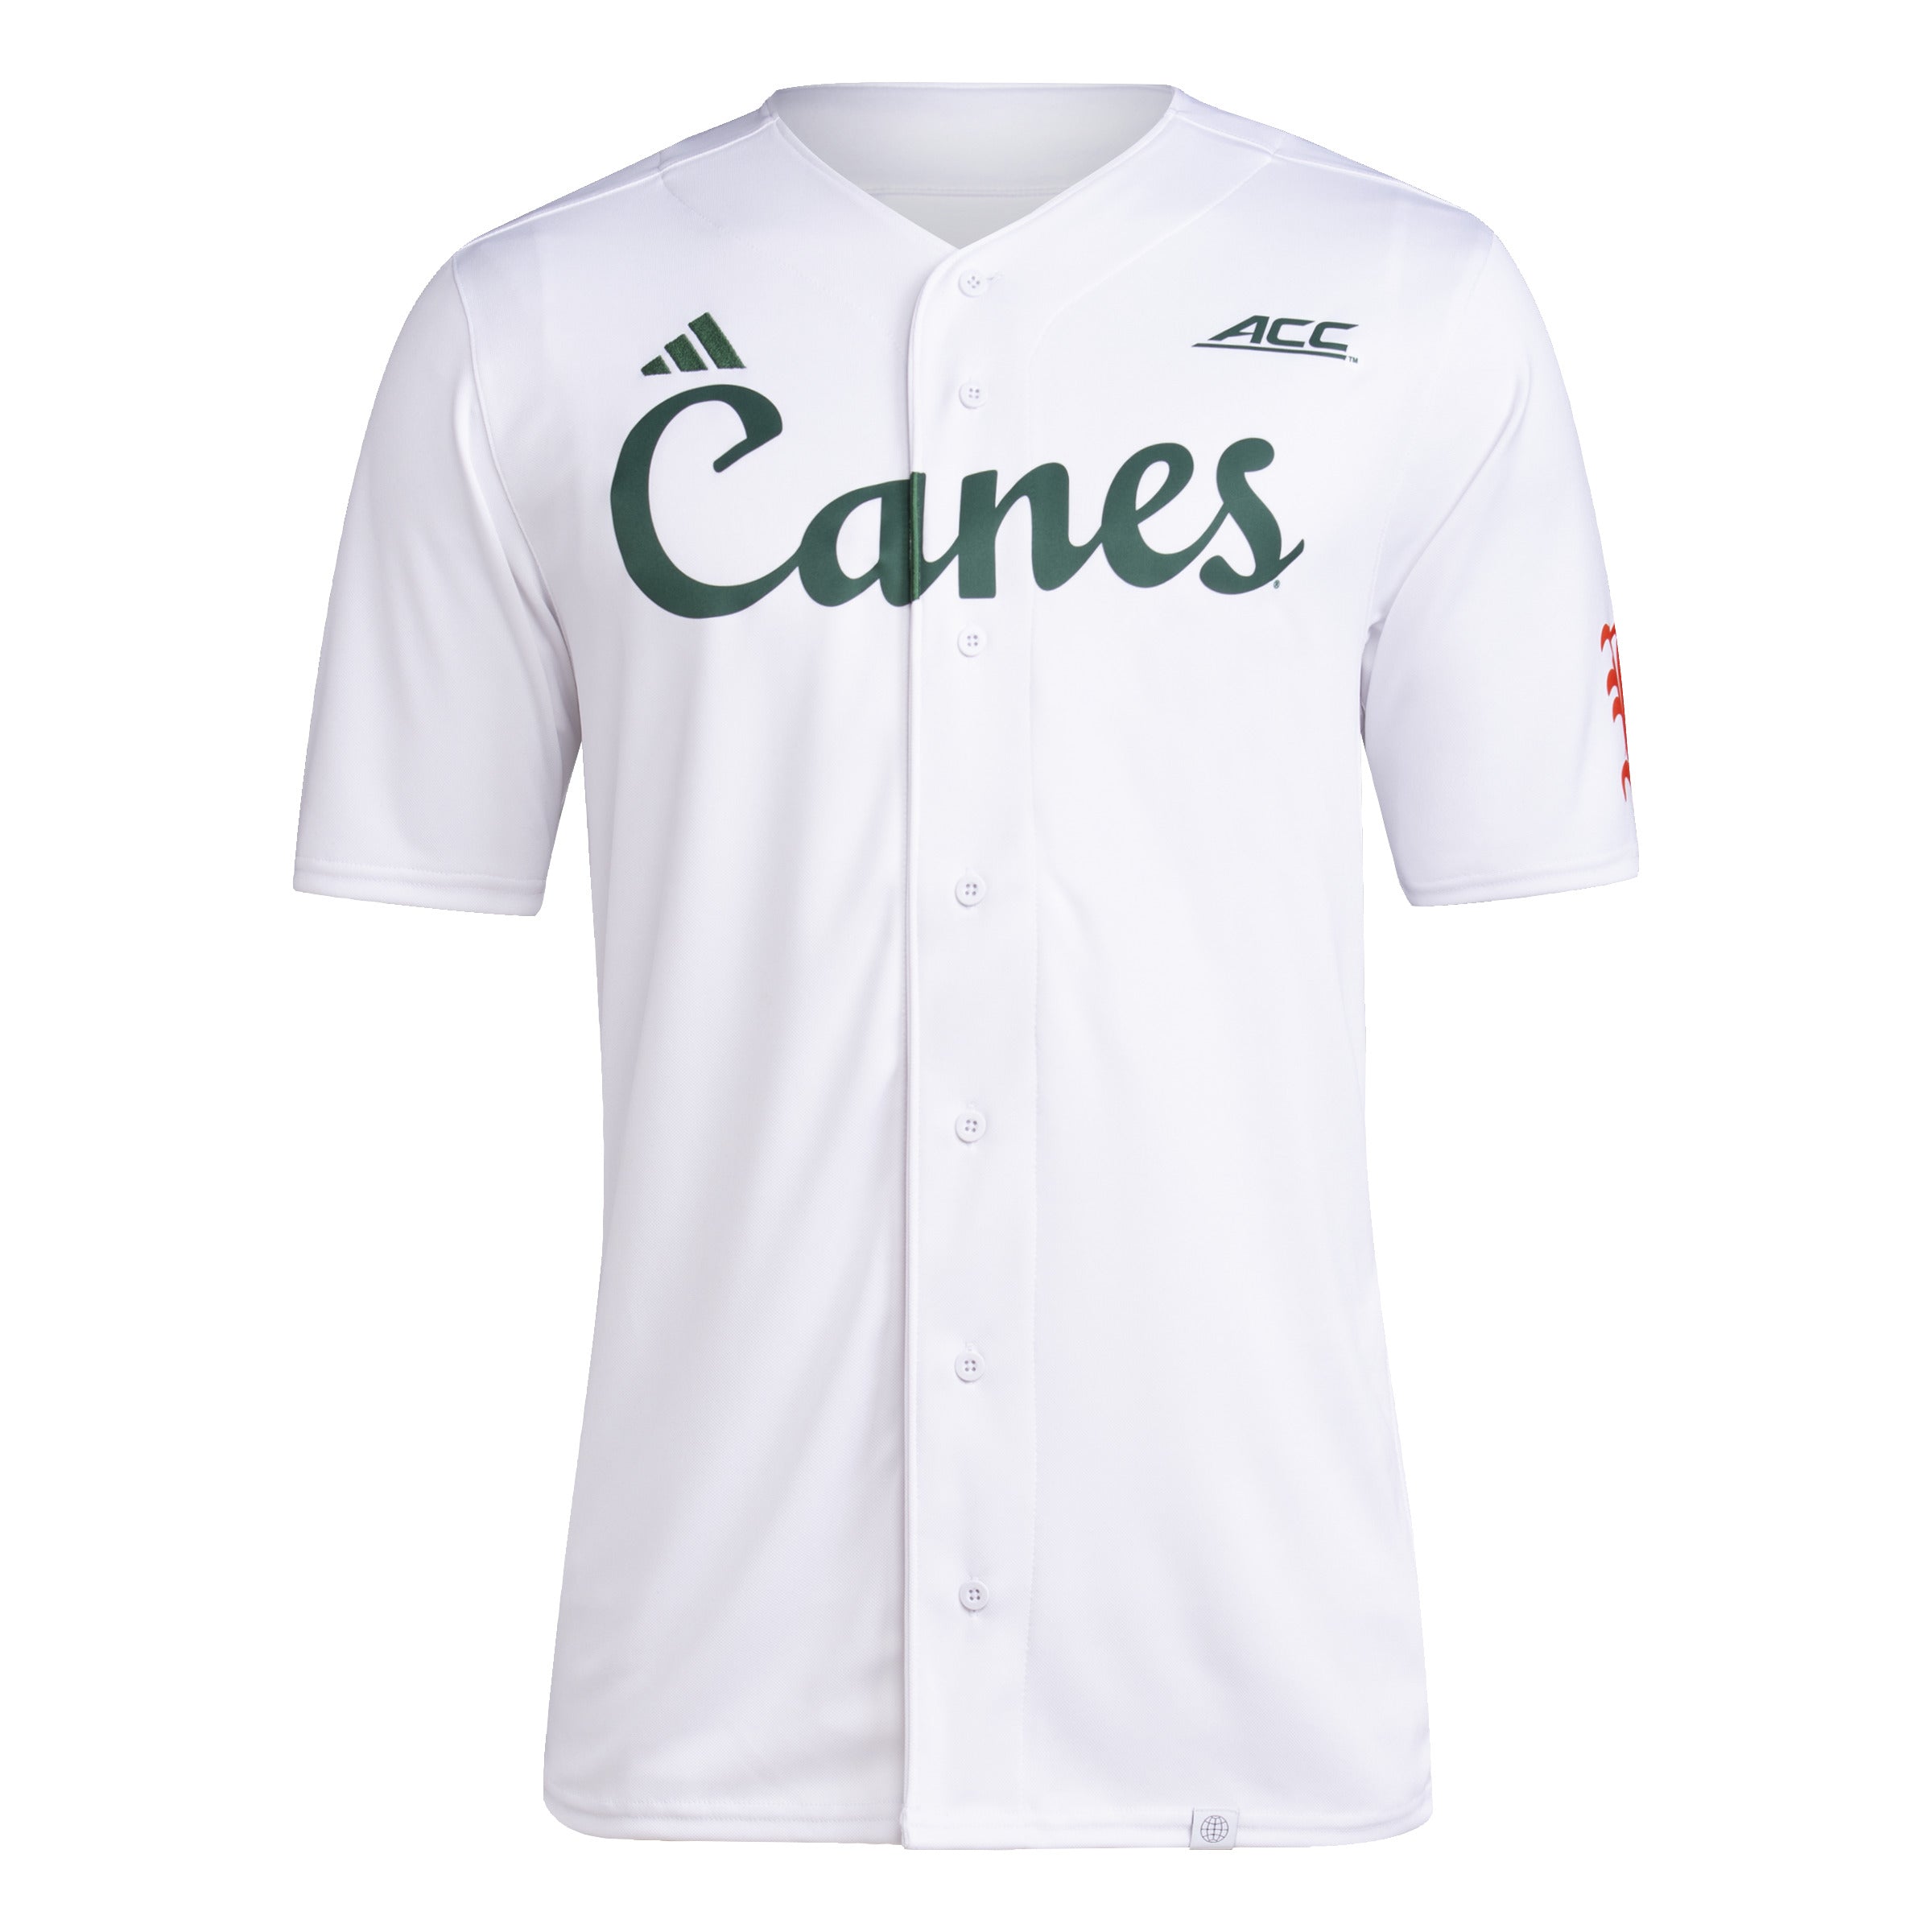 Miami Hurricanes adidas Canes Baseball Jersey - White no I